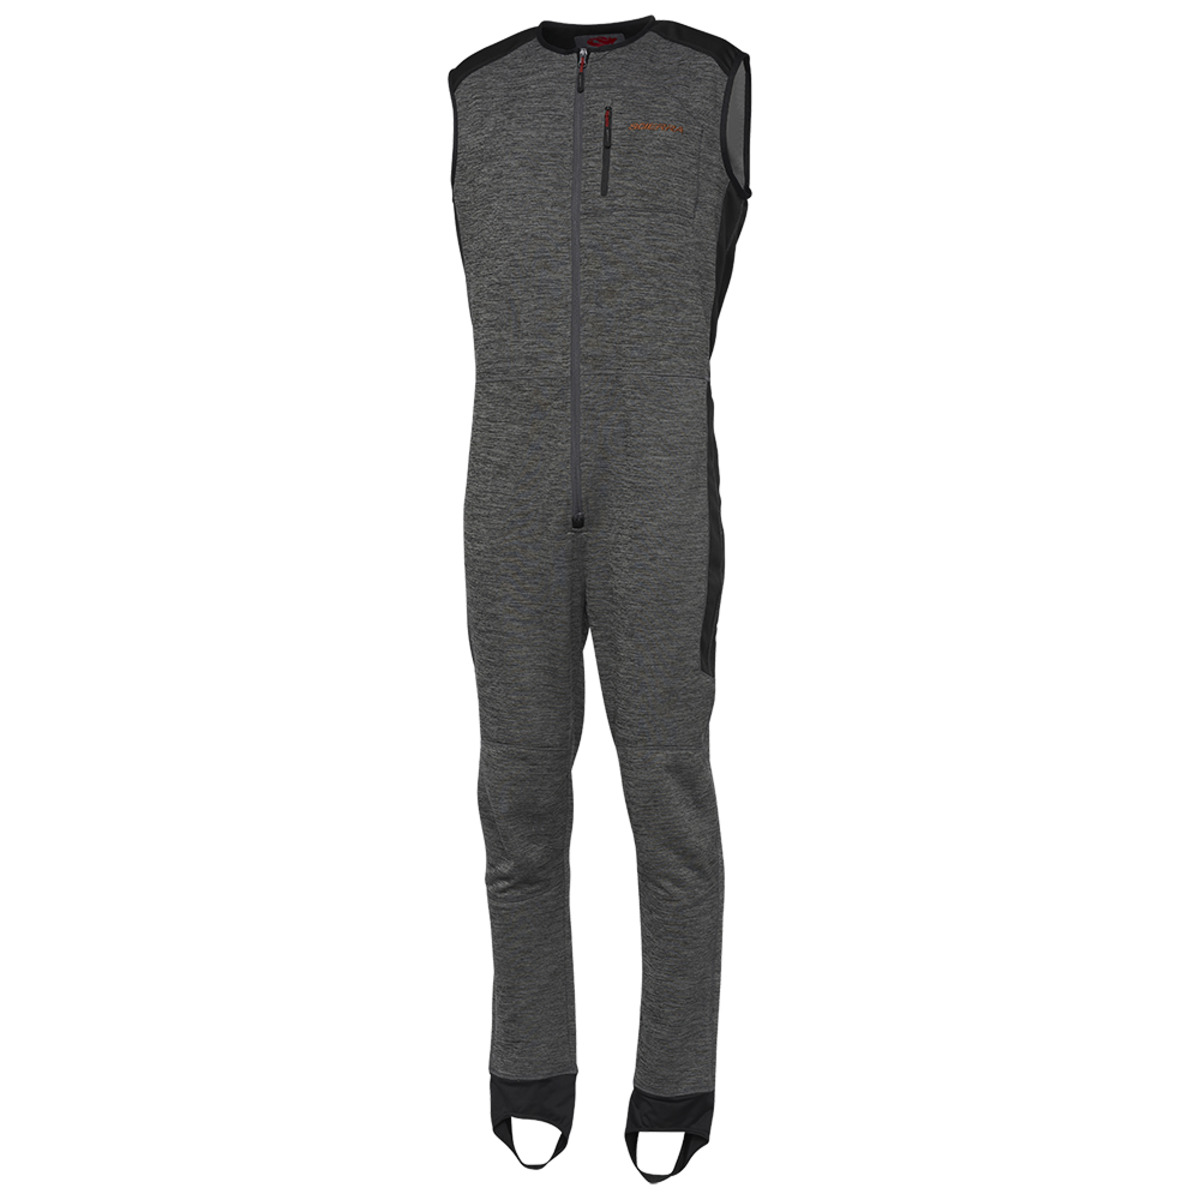 Scierra Insulated Body Suit - M PEWTER GREY MELANGE